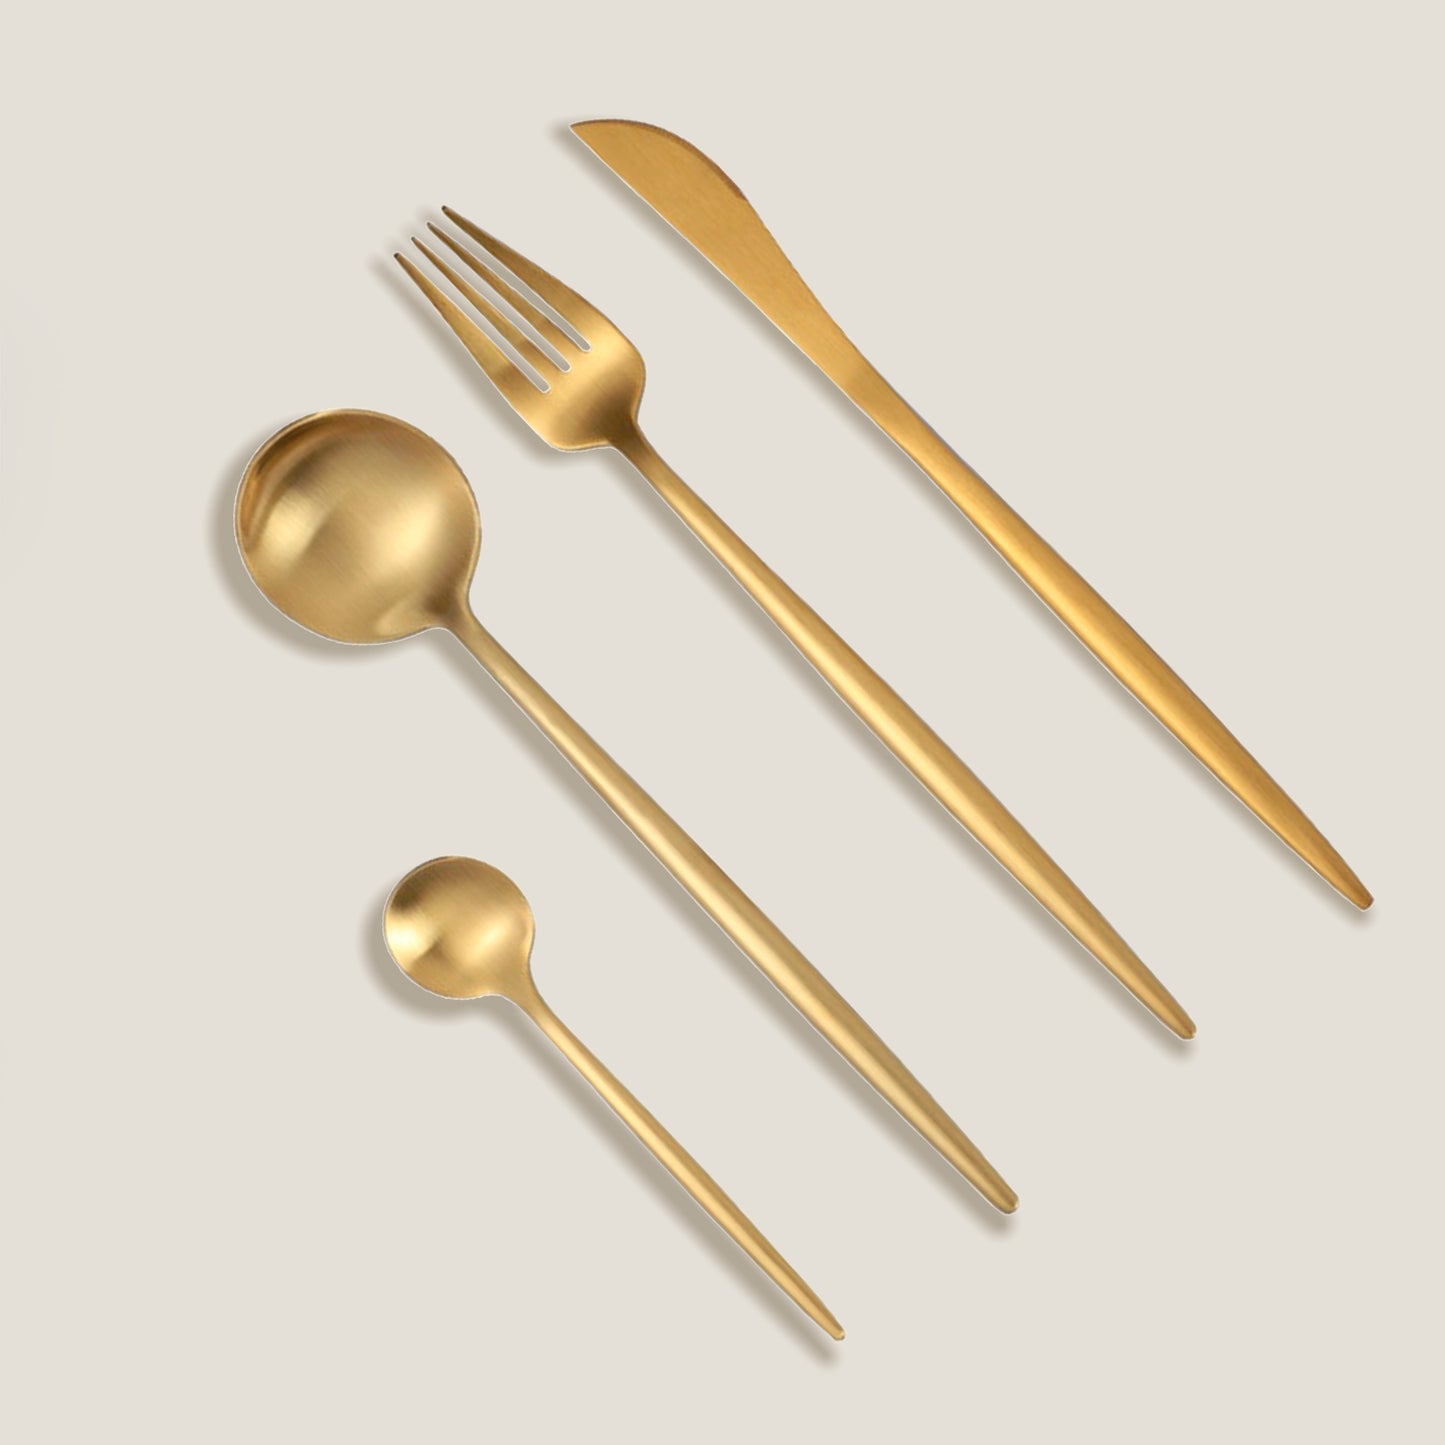 Line Gold Cutlery Set